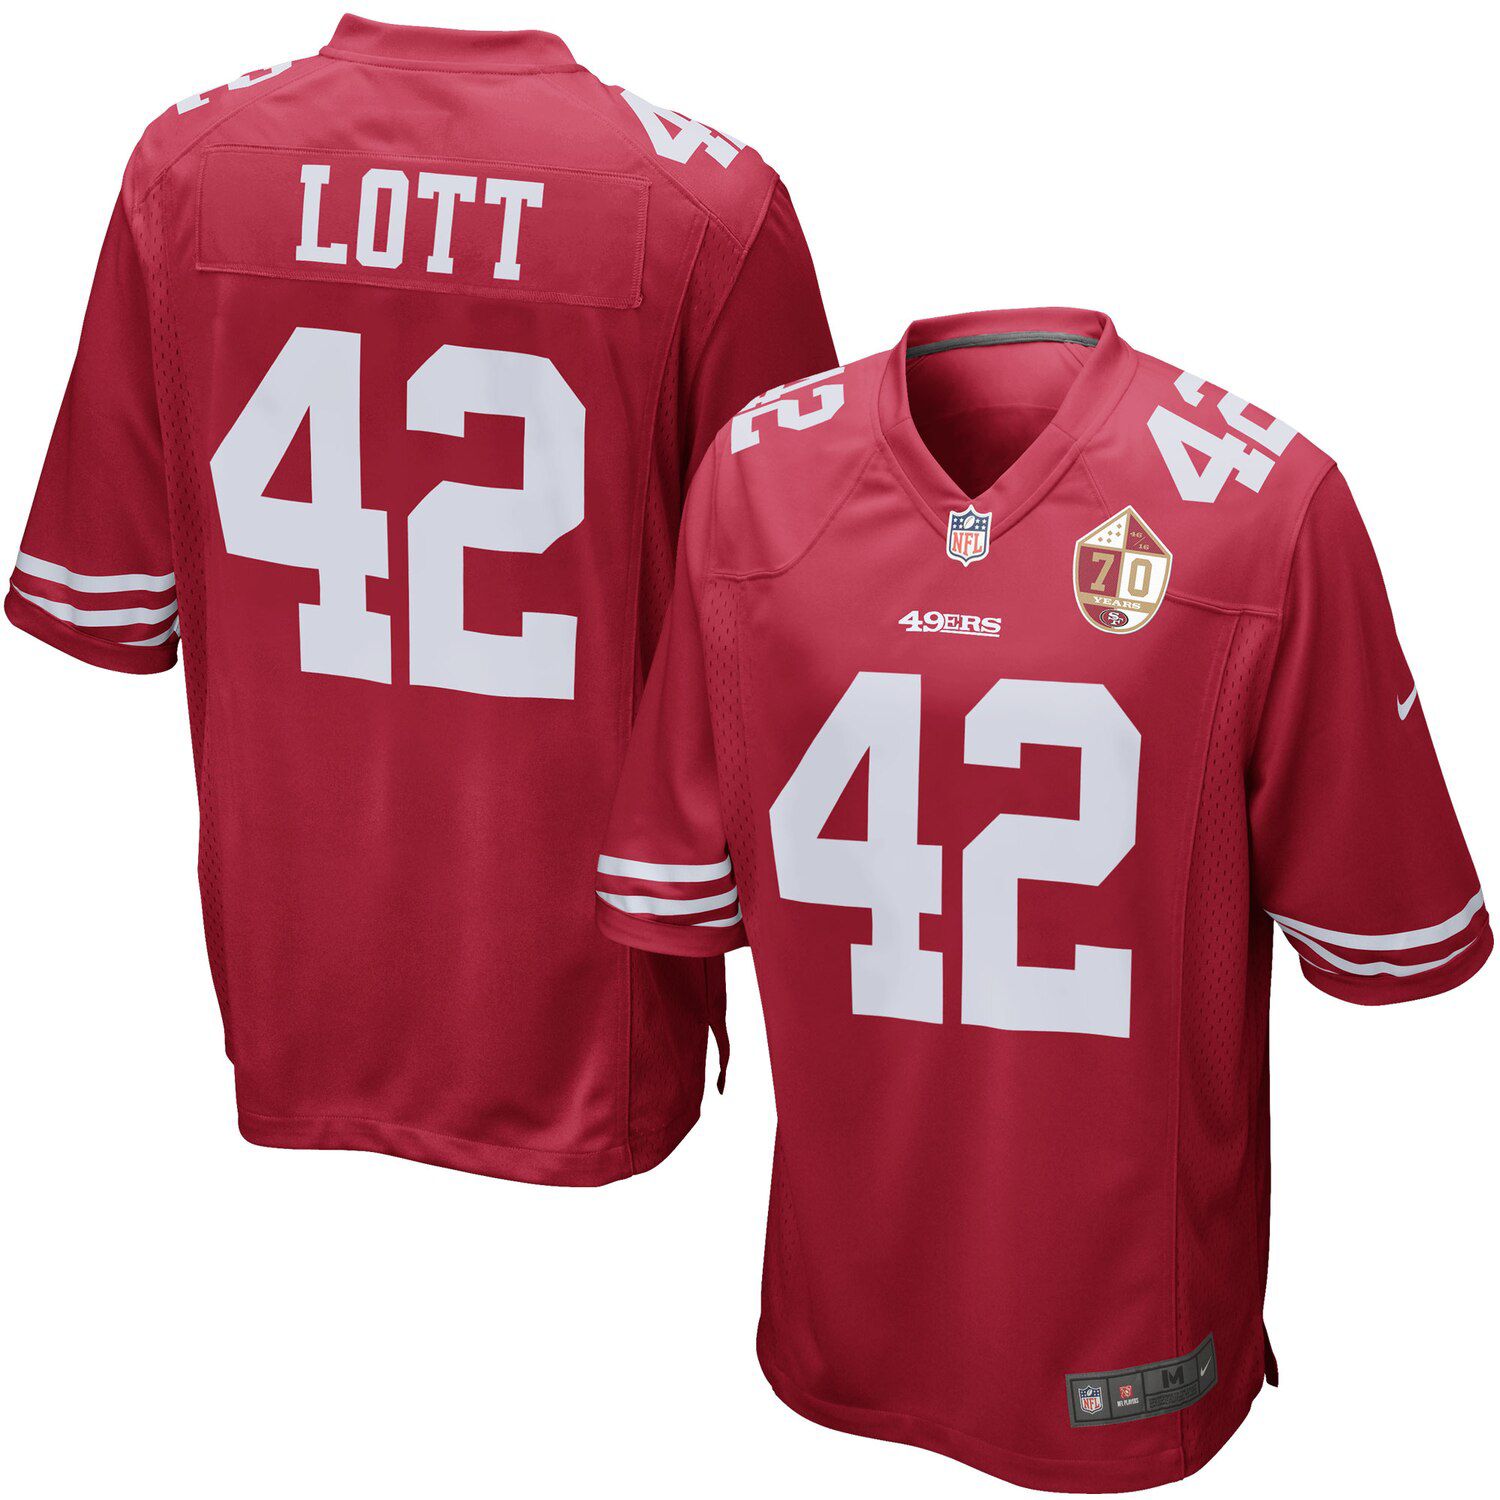 San Francisco 49ers Ronnie Lott jersey